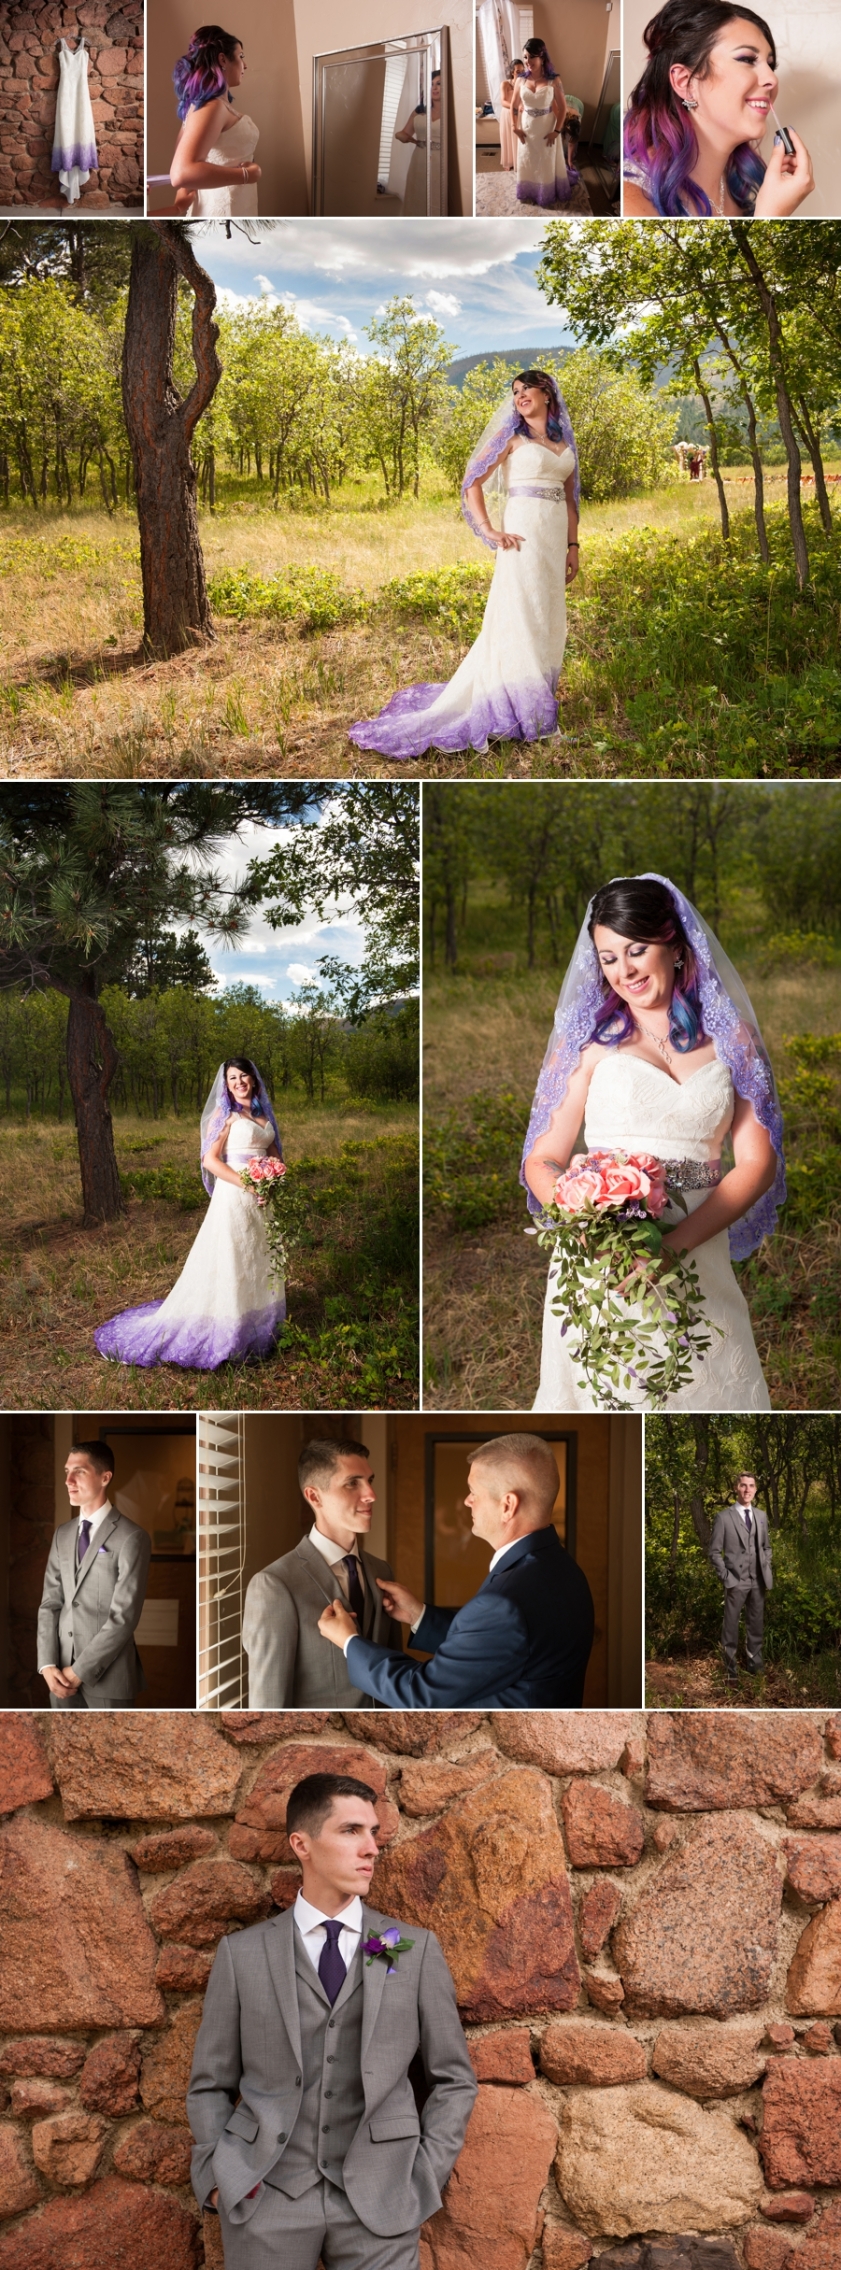 Colorado Springs Photographer Jonathan Betz Photography Weddings 1